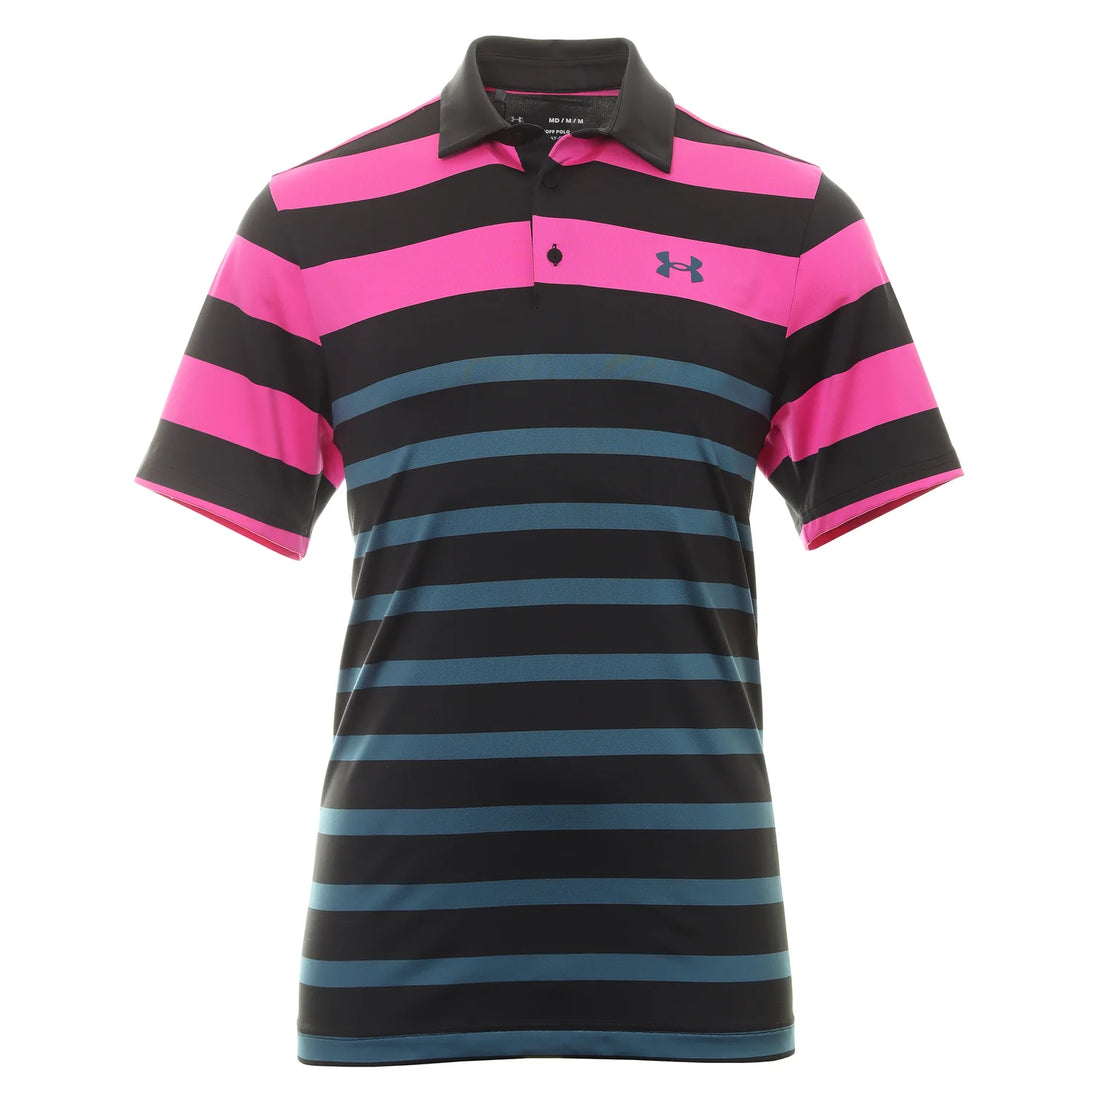 Playoff 3.0 Stripe Polo (Pink/Black)